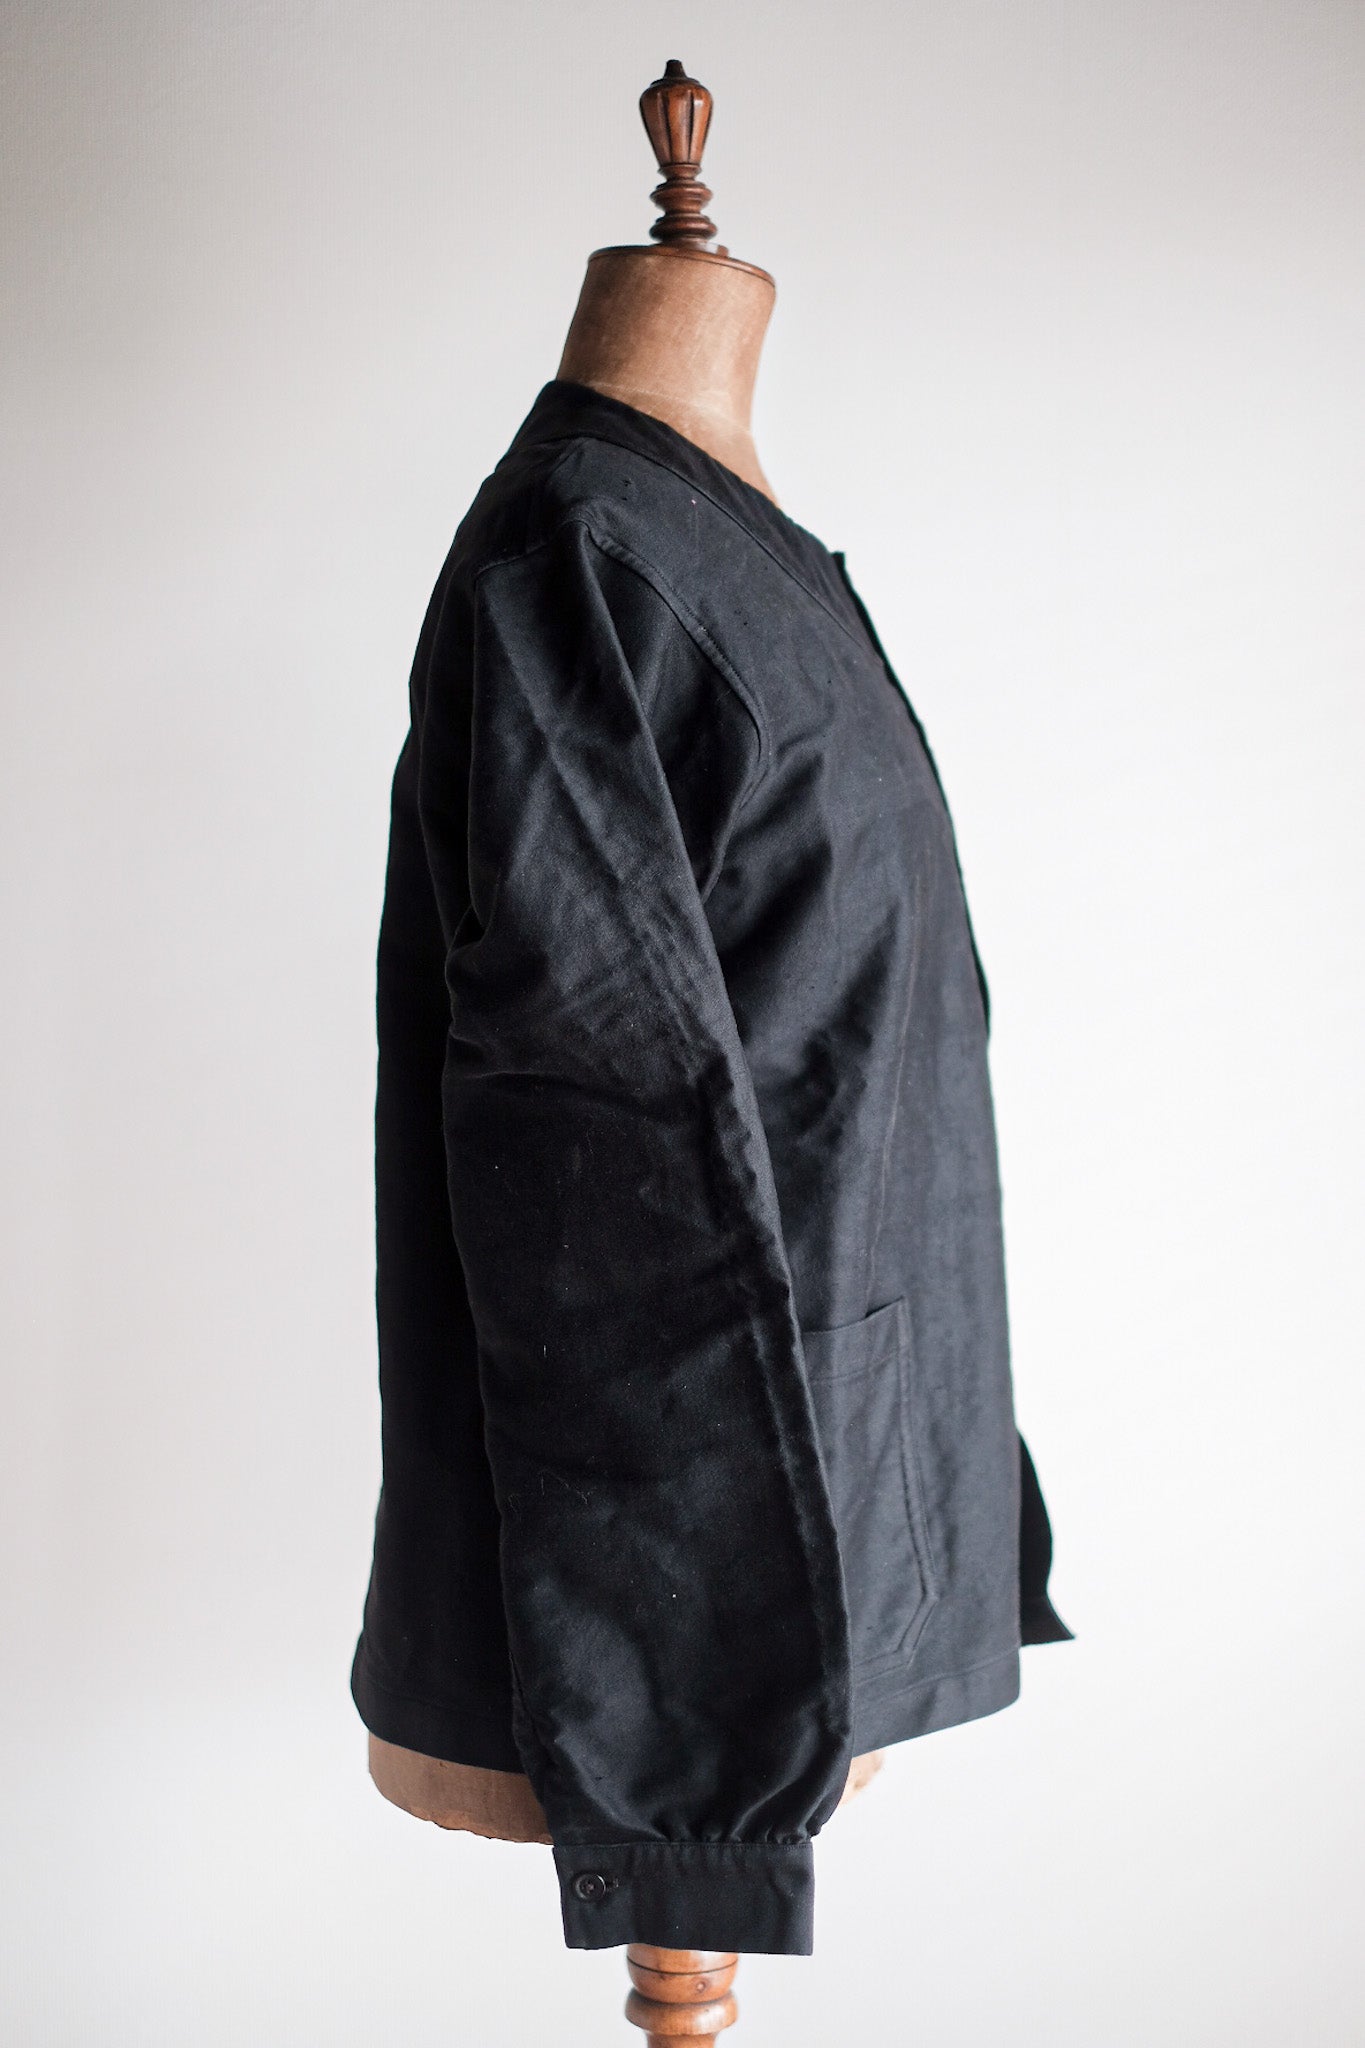 【~20's】French Vintage Black Moleskin Work Jacket "6 Buttons" "Dead Stock"